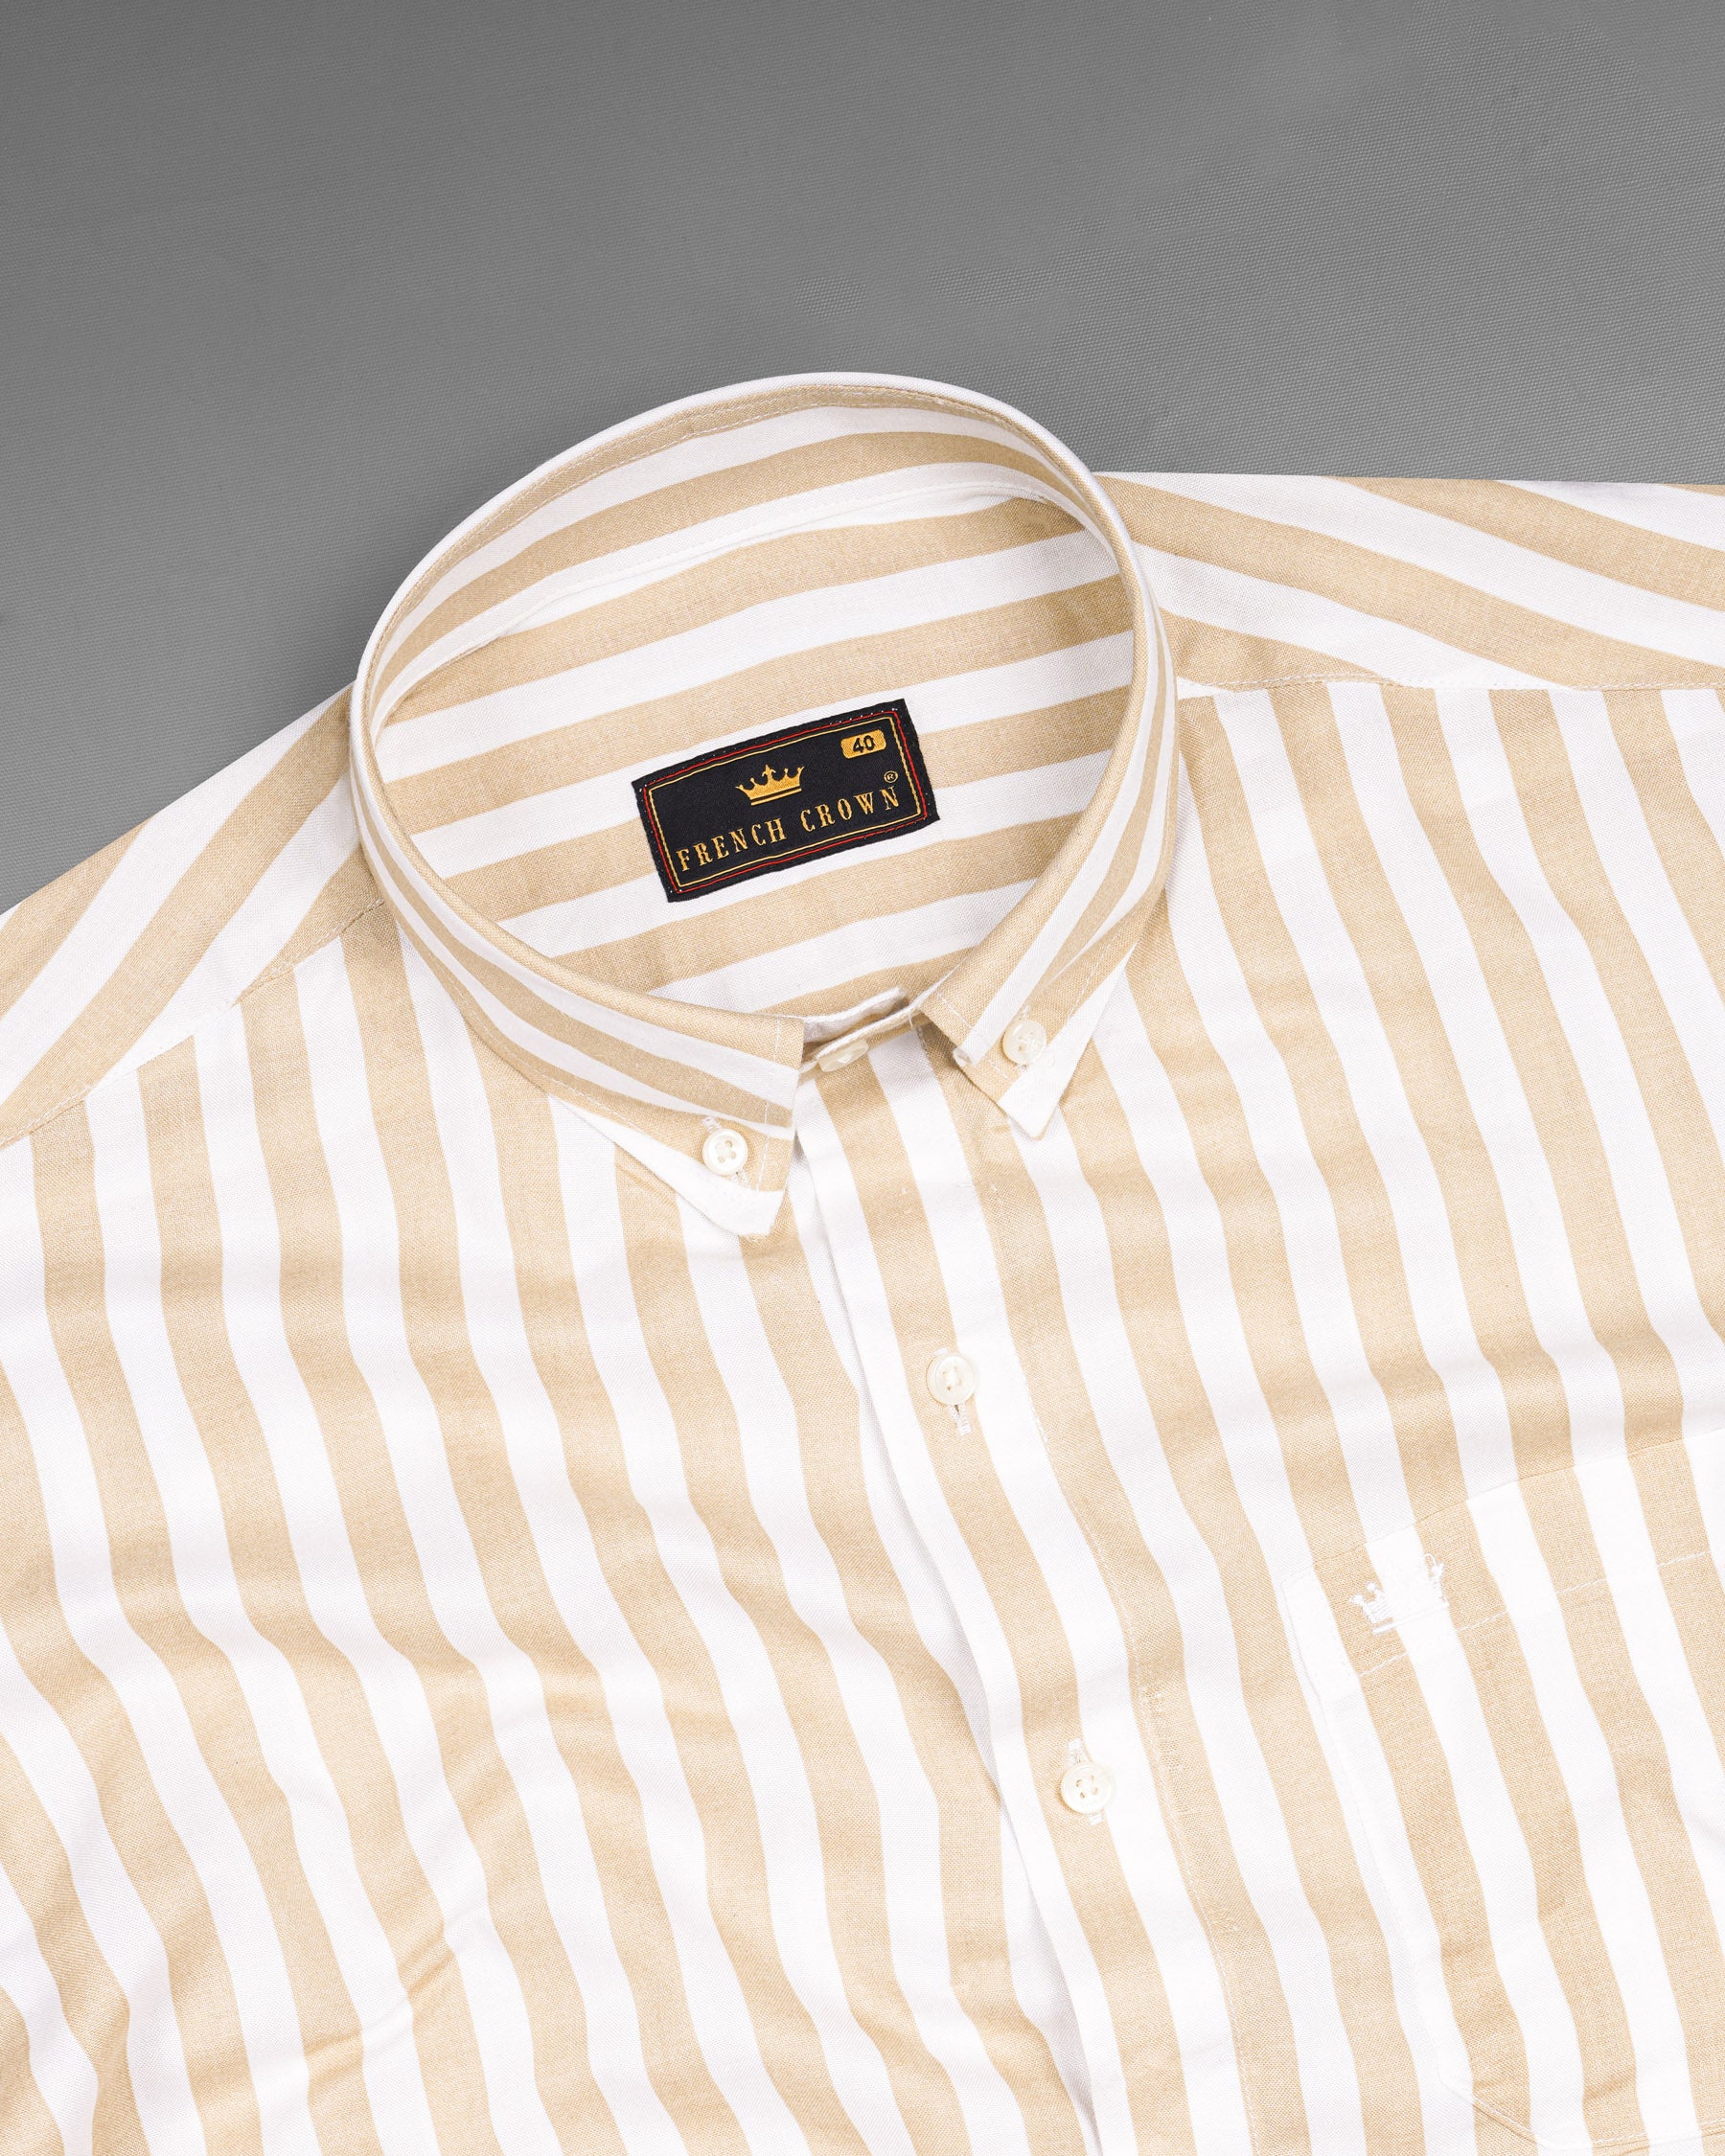 Pavlova Brown and Bright White Vertical Striped Premium Tencel Shirt